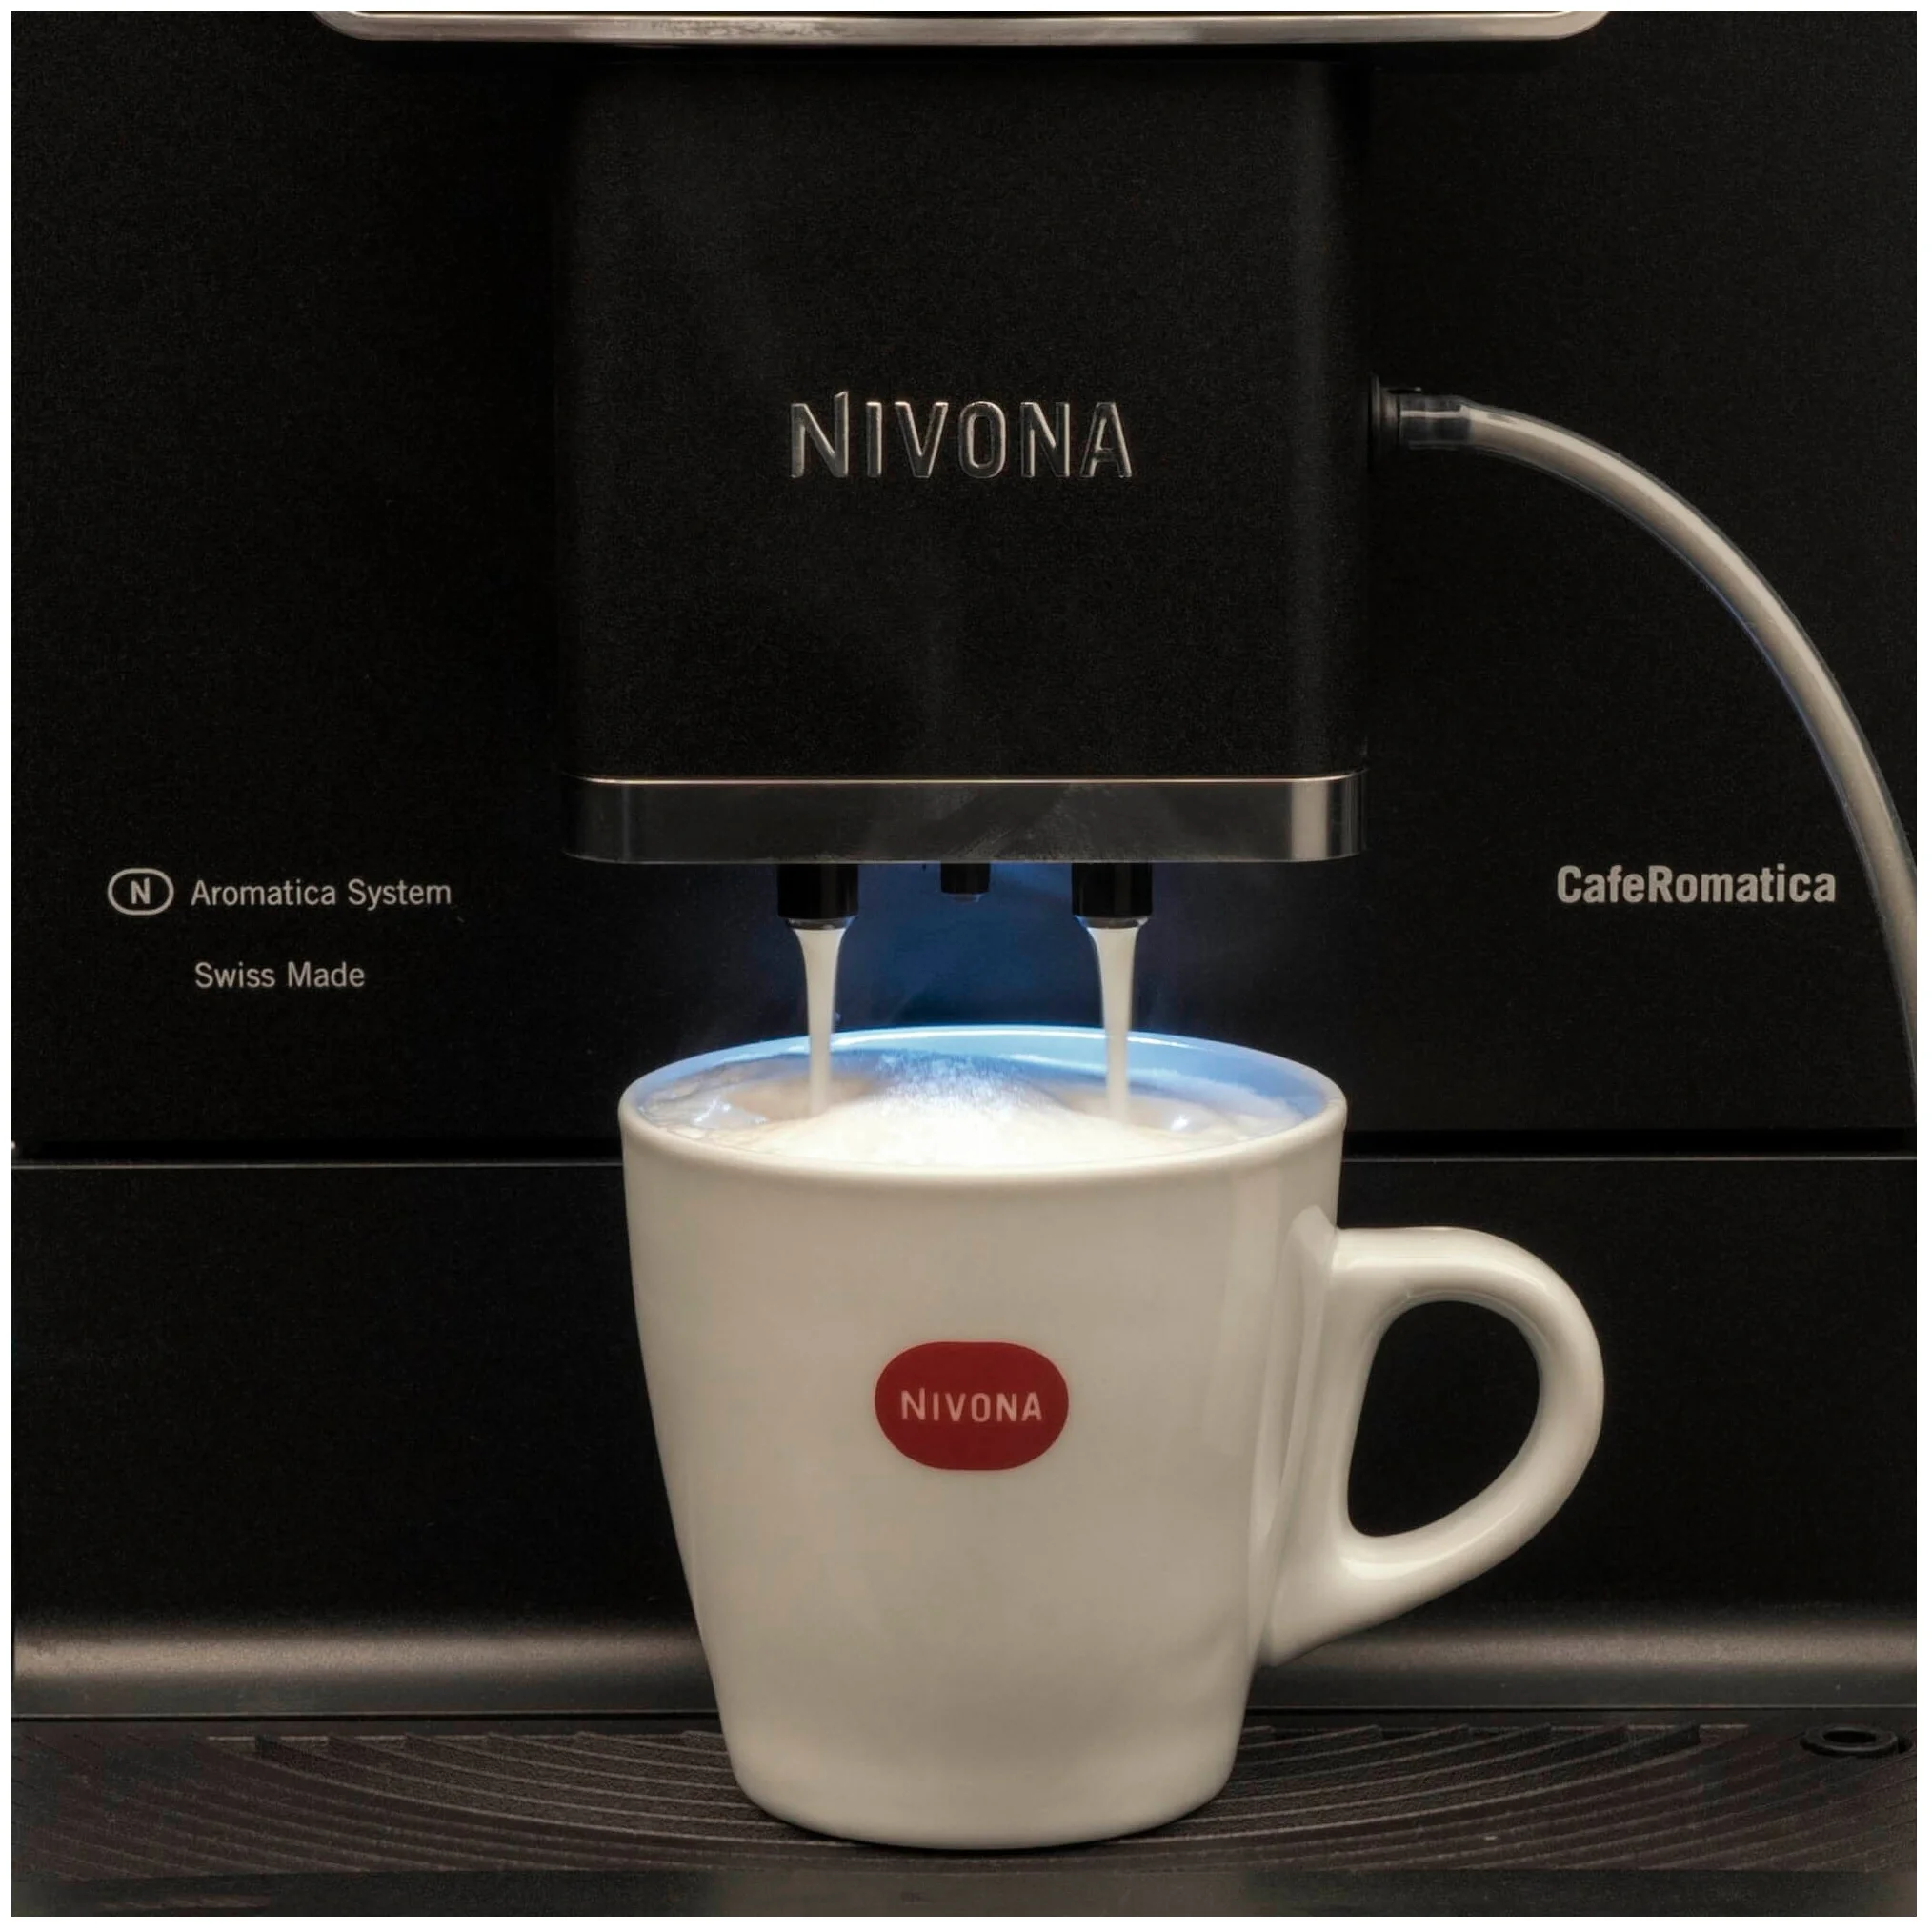 Nivona CafeRomatica 960 - количество степеней помола: 5